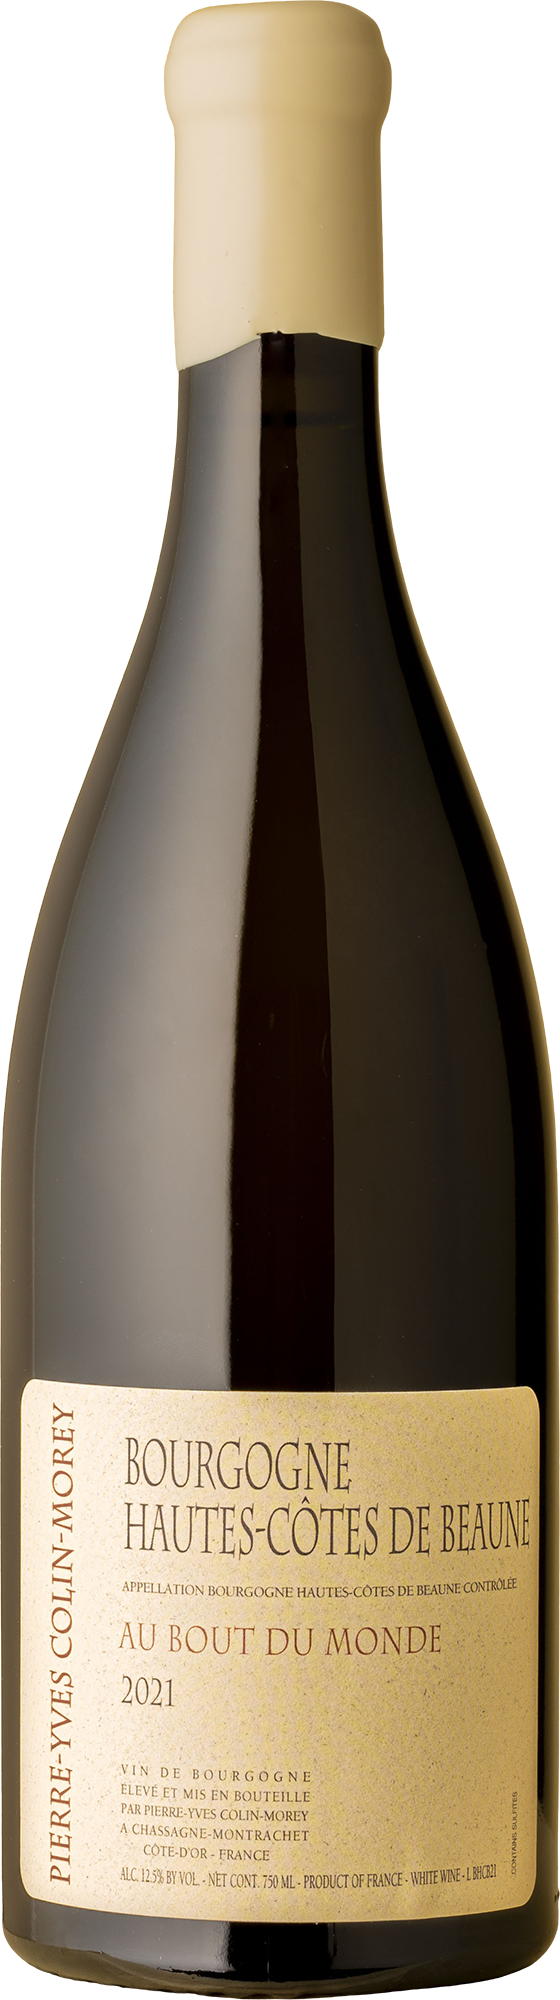 Pierre-Yves Colin-Morey - Bourgogne Hautes Cotes de Beaune Chardonnay 2021 White Wine